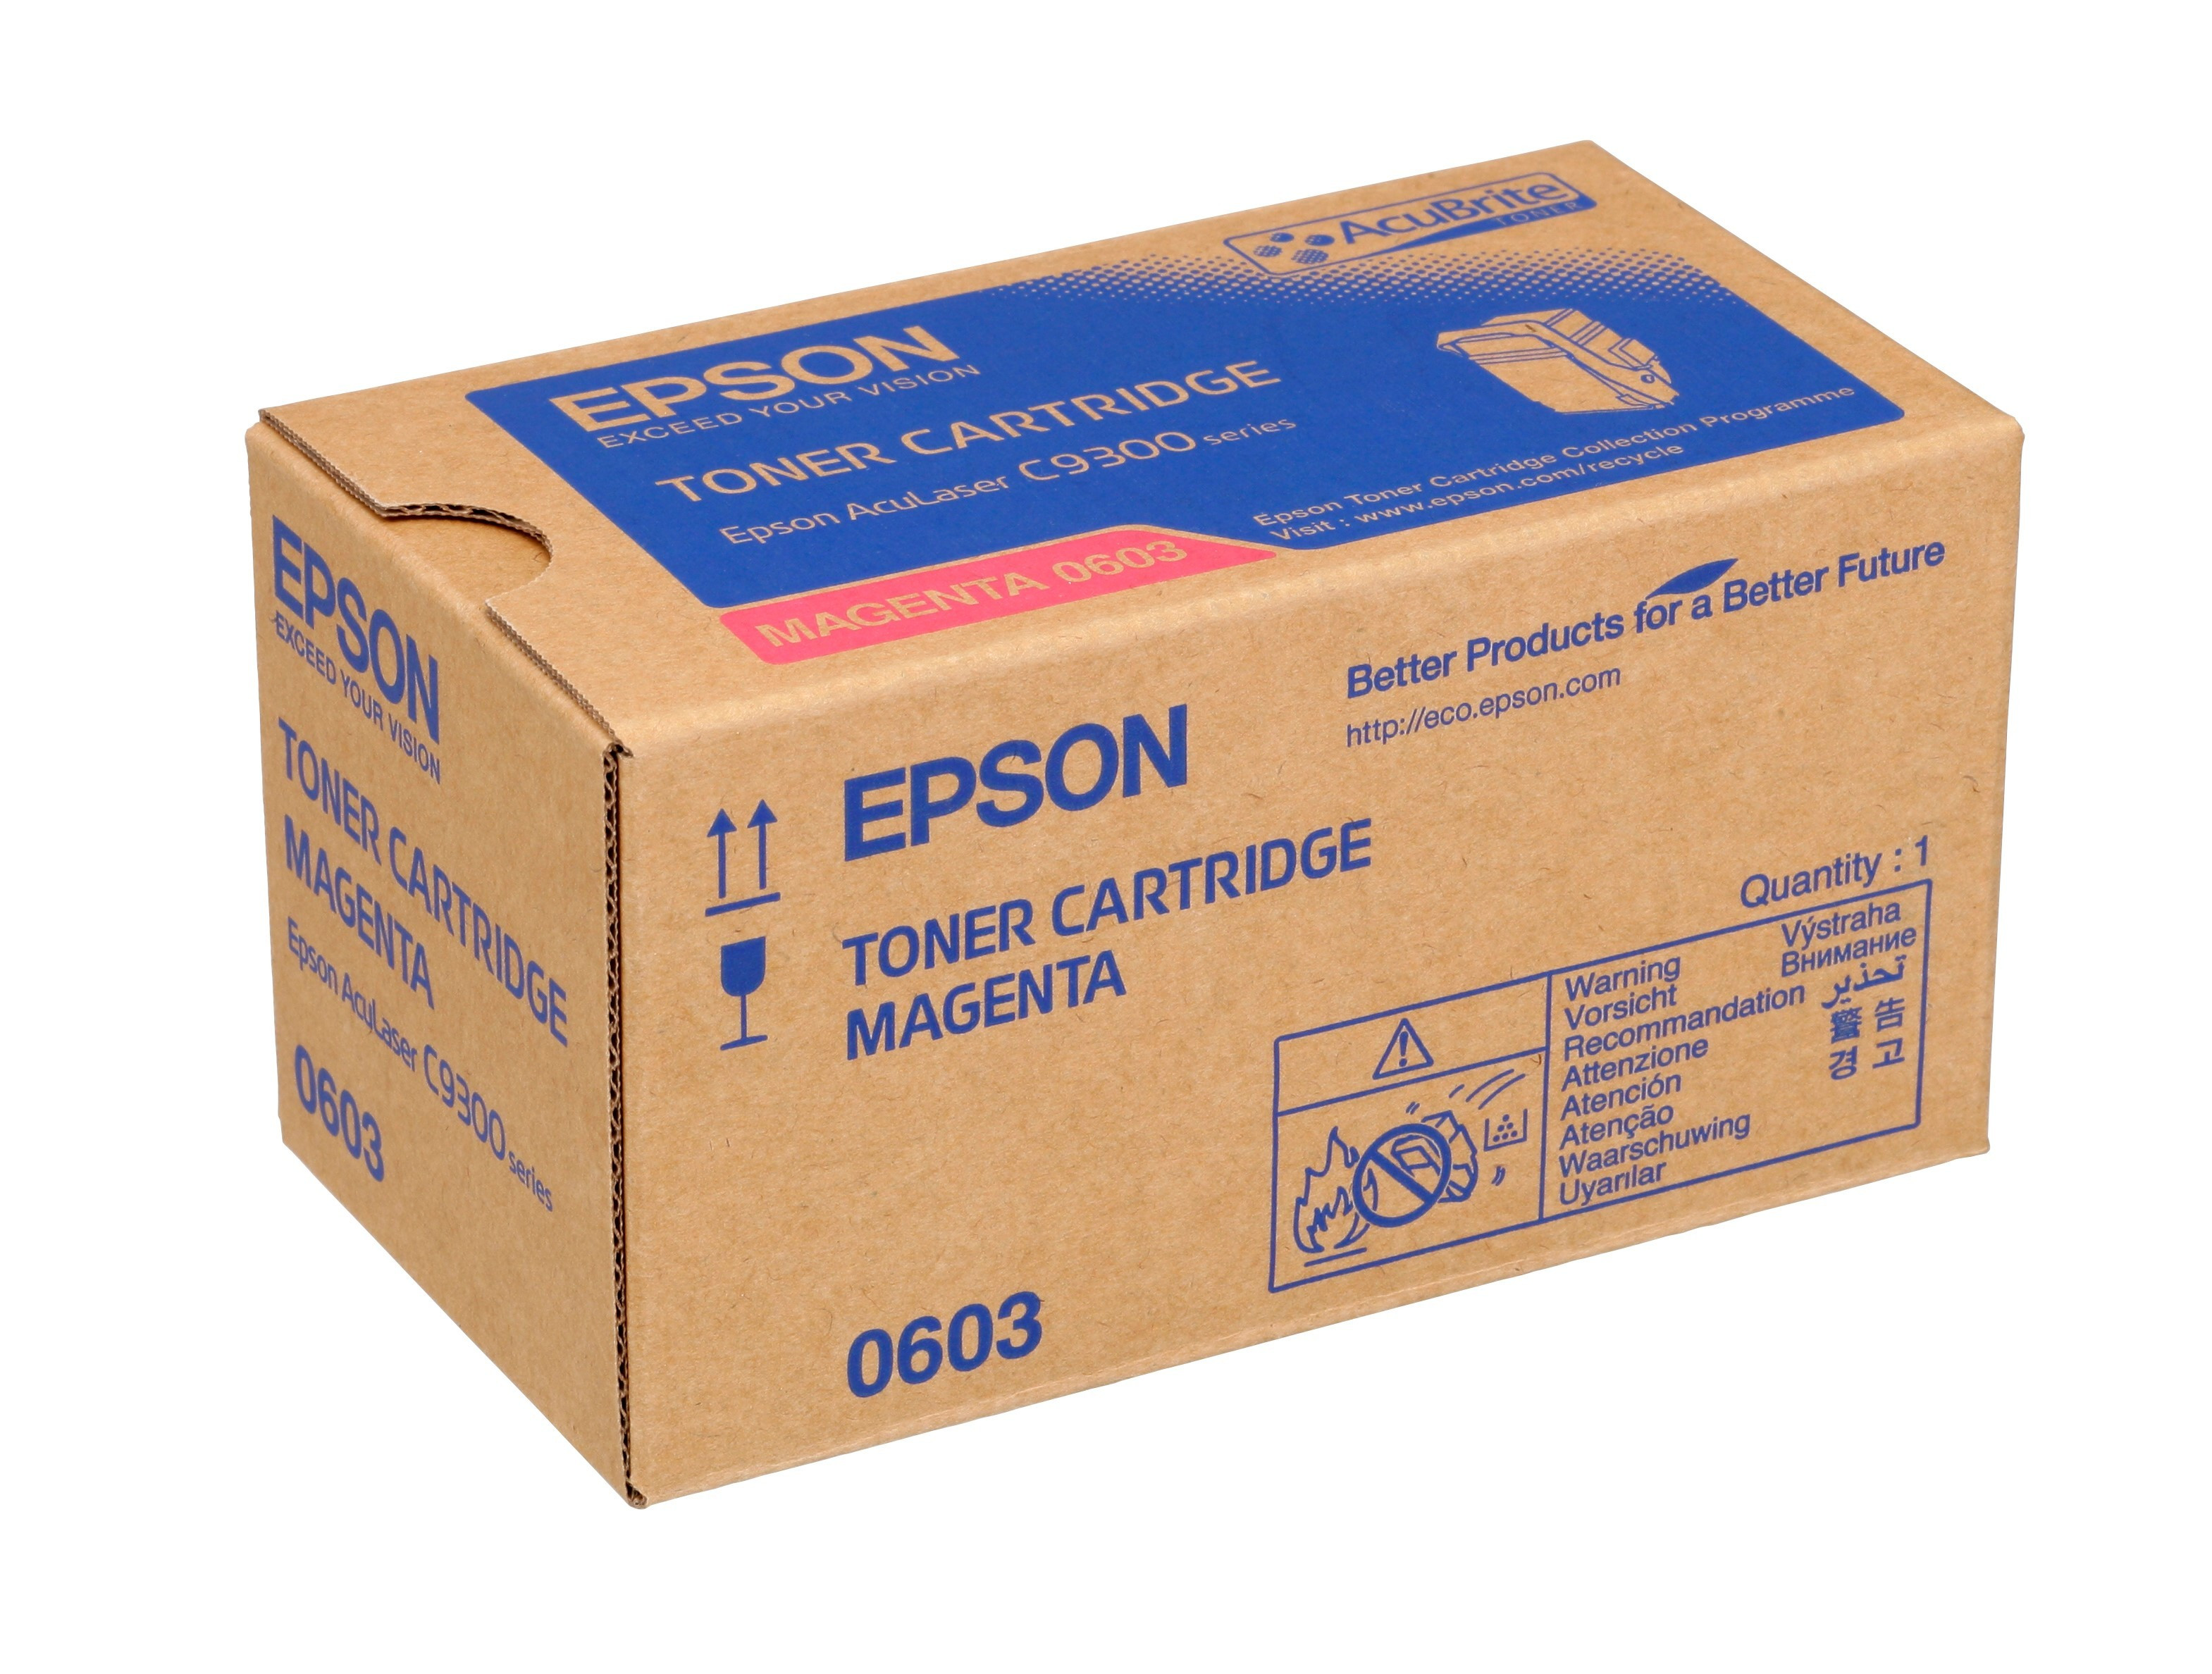 Epson C9300 Toner Magenta 7,5K (Eredeti)